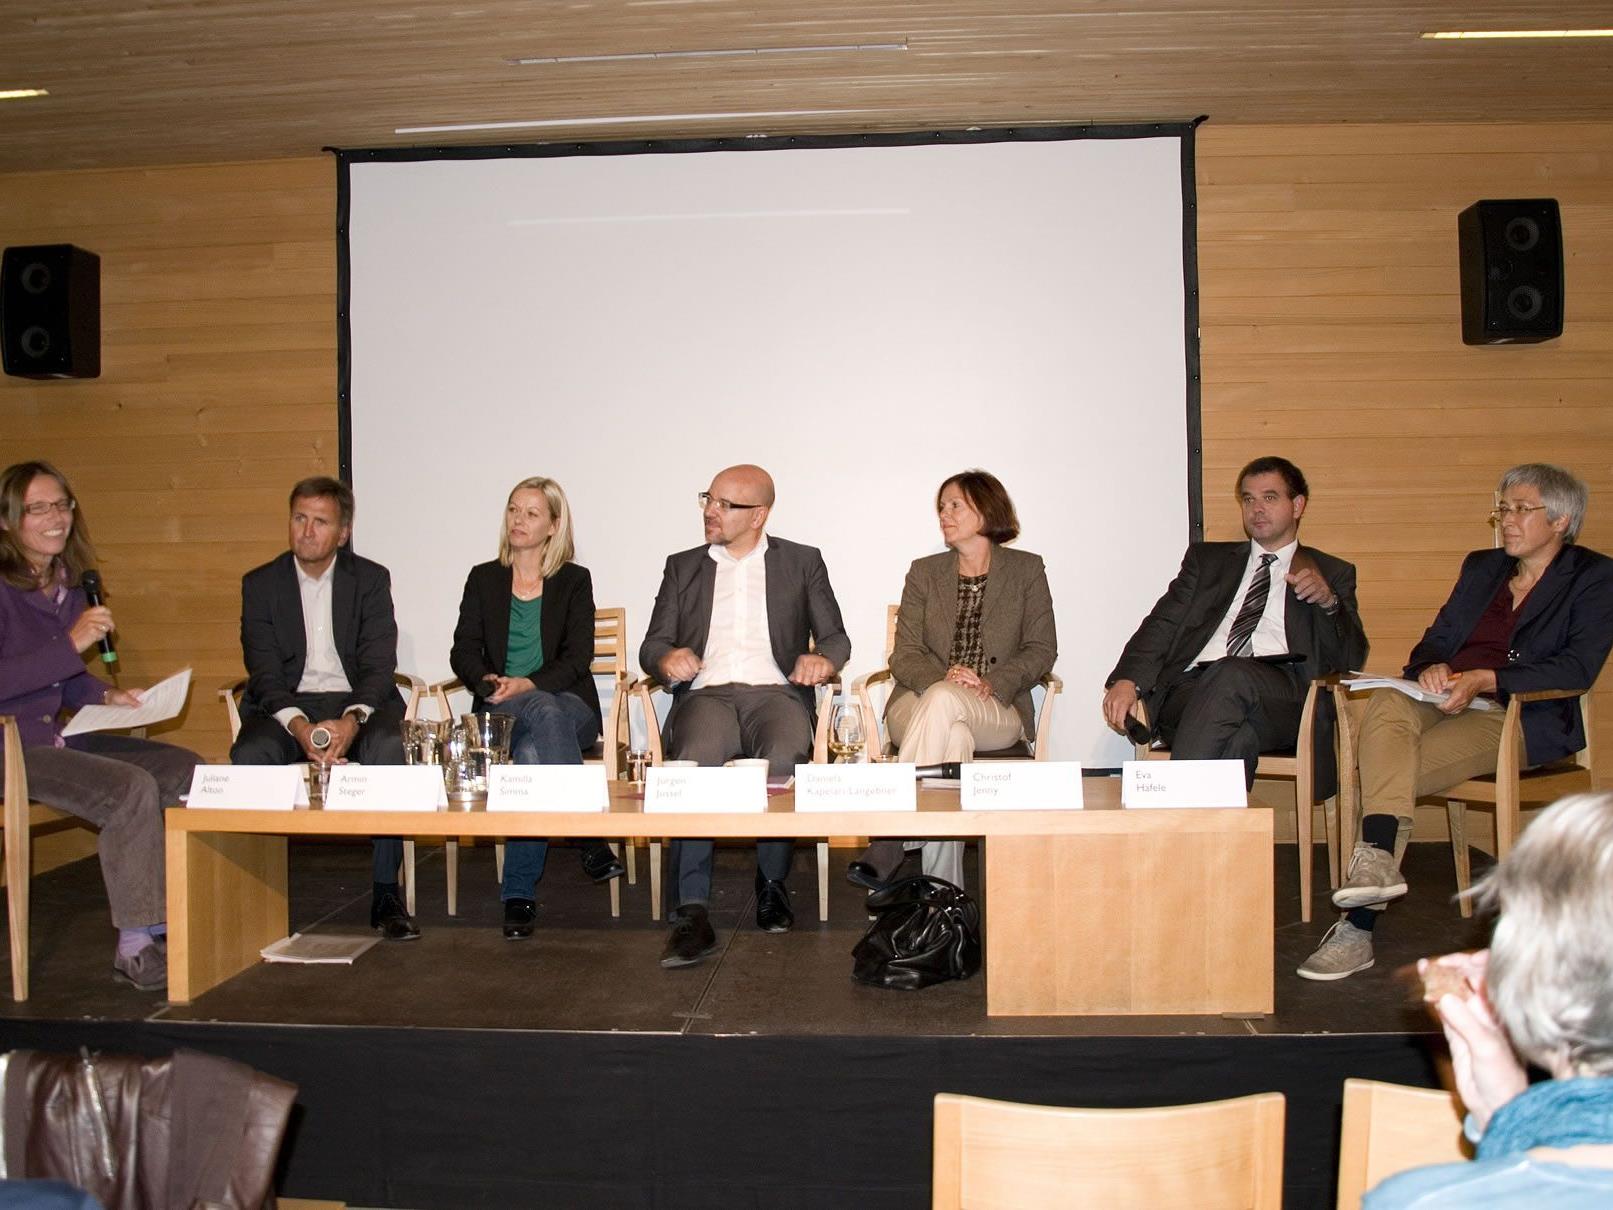 Am Podium diskutierten: Kamila Simma, Jürgen Jussel, Christoph Jenny, Daniel Kapelari-Langebner, Eva Häfele, Armin Steger und Juliane Alton.